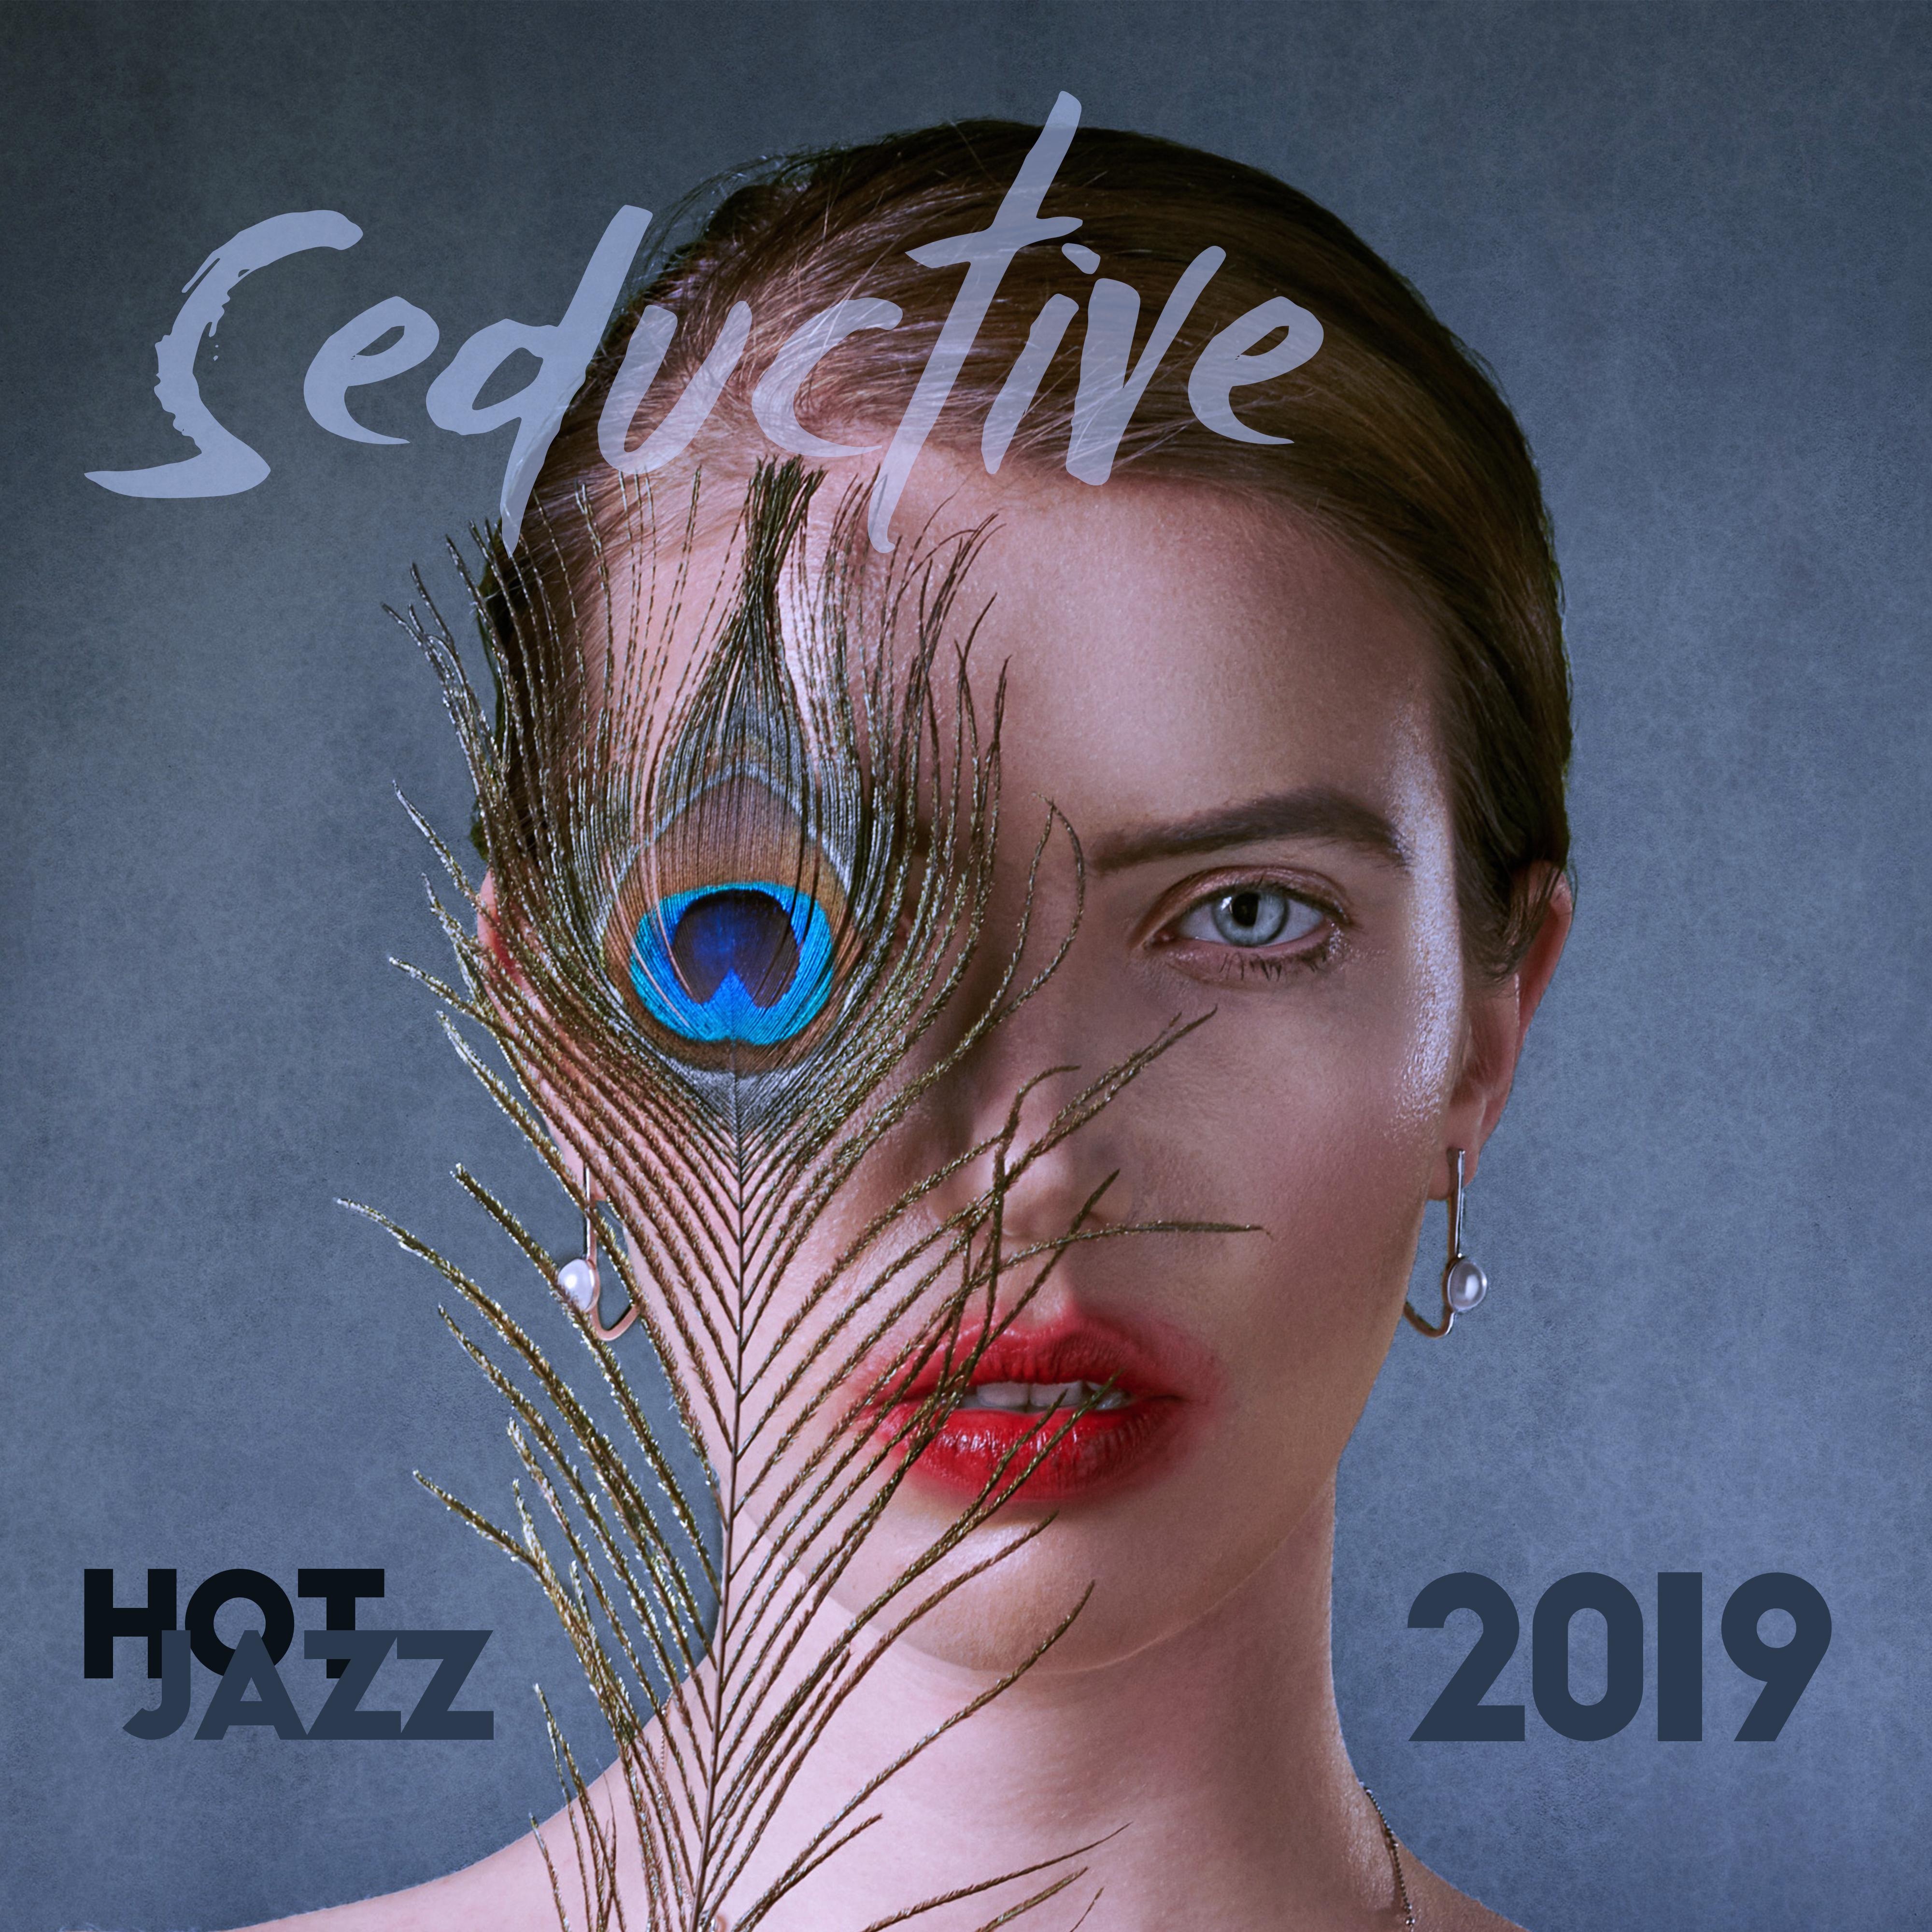 Seductive Hot Jazz 2019 – Kamasutra Music, Making Love, Erotic Massage, Sexy Vibes, Sesnual Jazz Music for Lovers